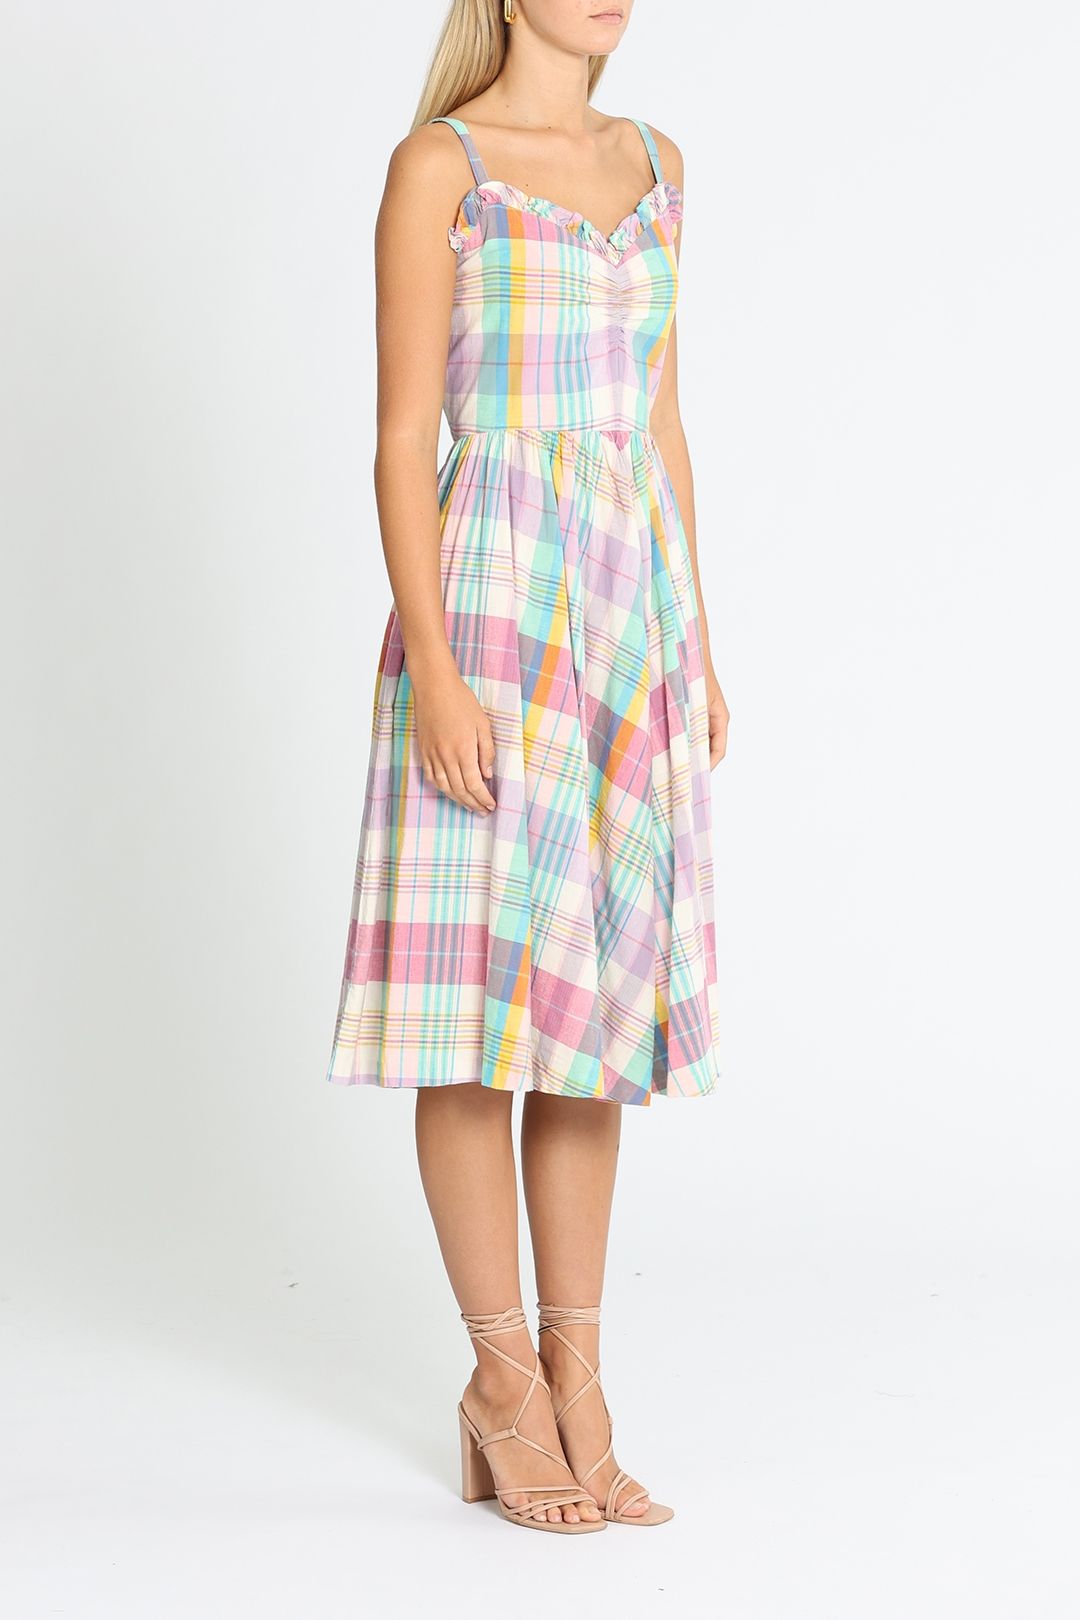 Ralph Lauren Multi Checkered Dress Ruffle